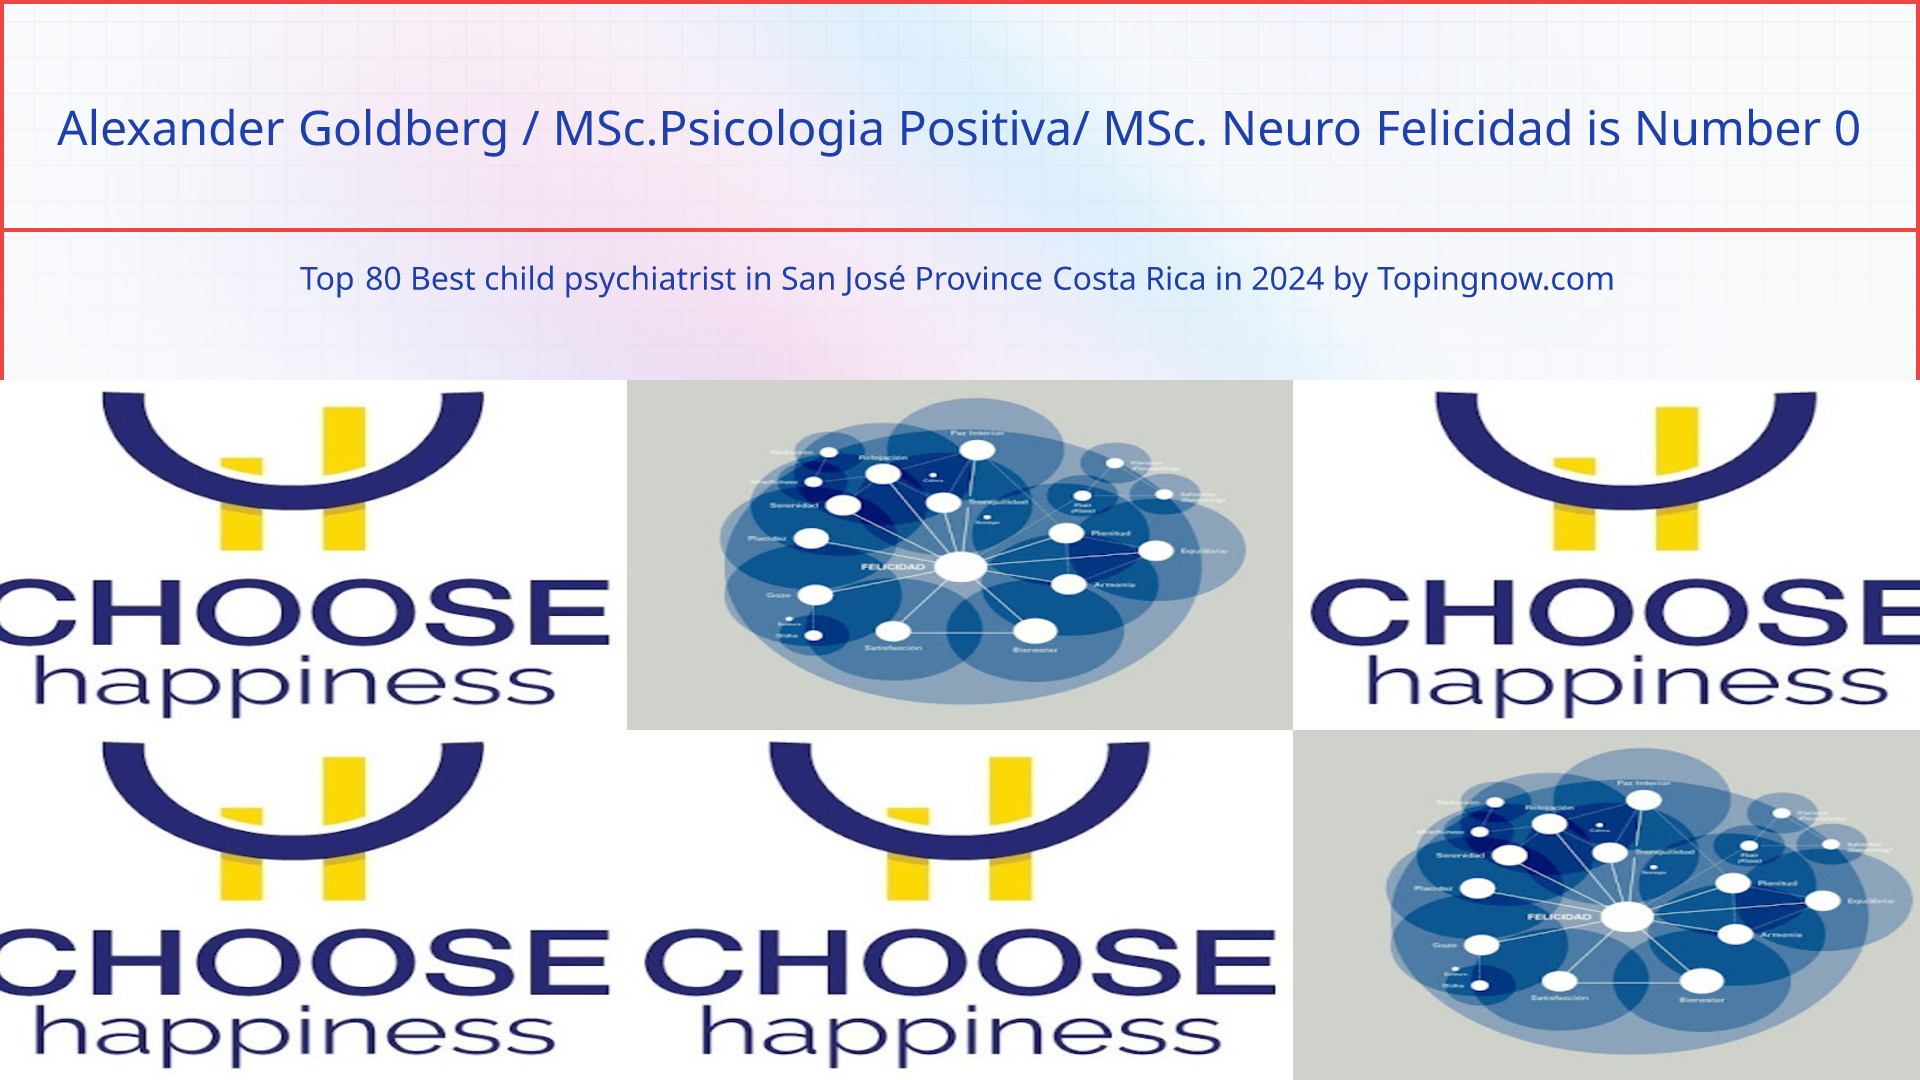 Alexander Goldberg / MSc.Psicologia Positiva/ MSc. Neuro Felicidad: Top 80 Best child psychiatrist in San José Province Costa Rica in 2024